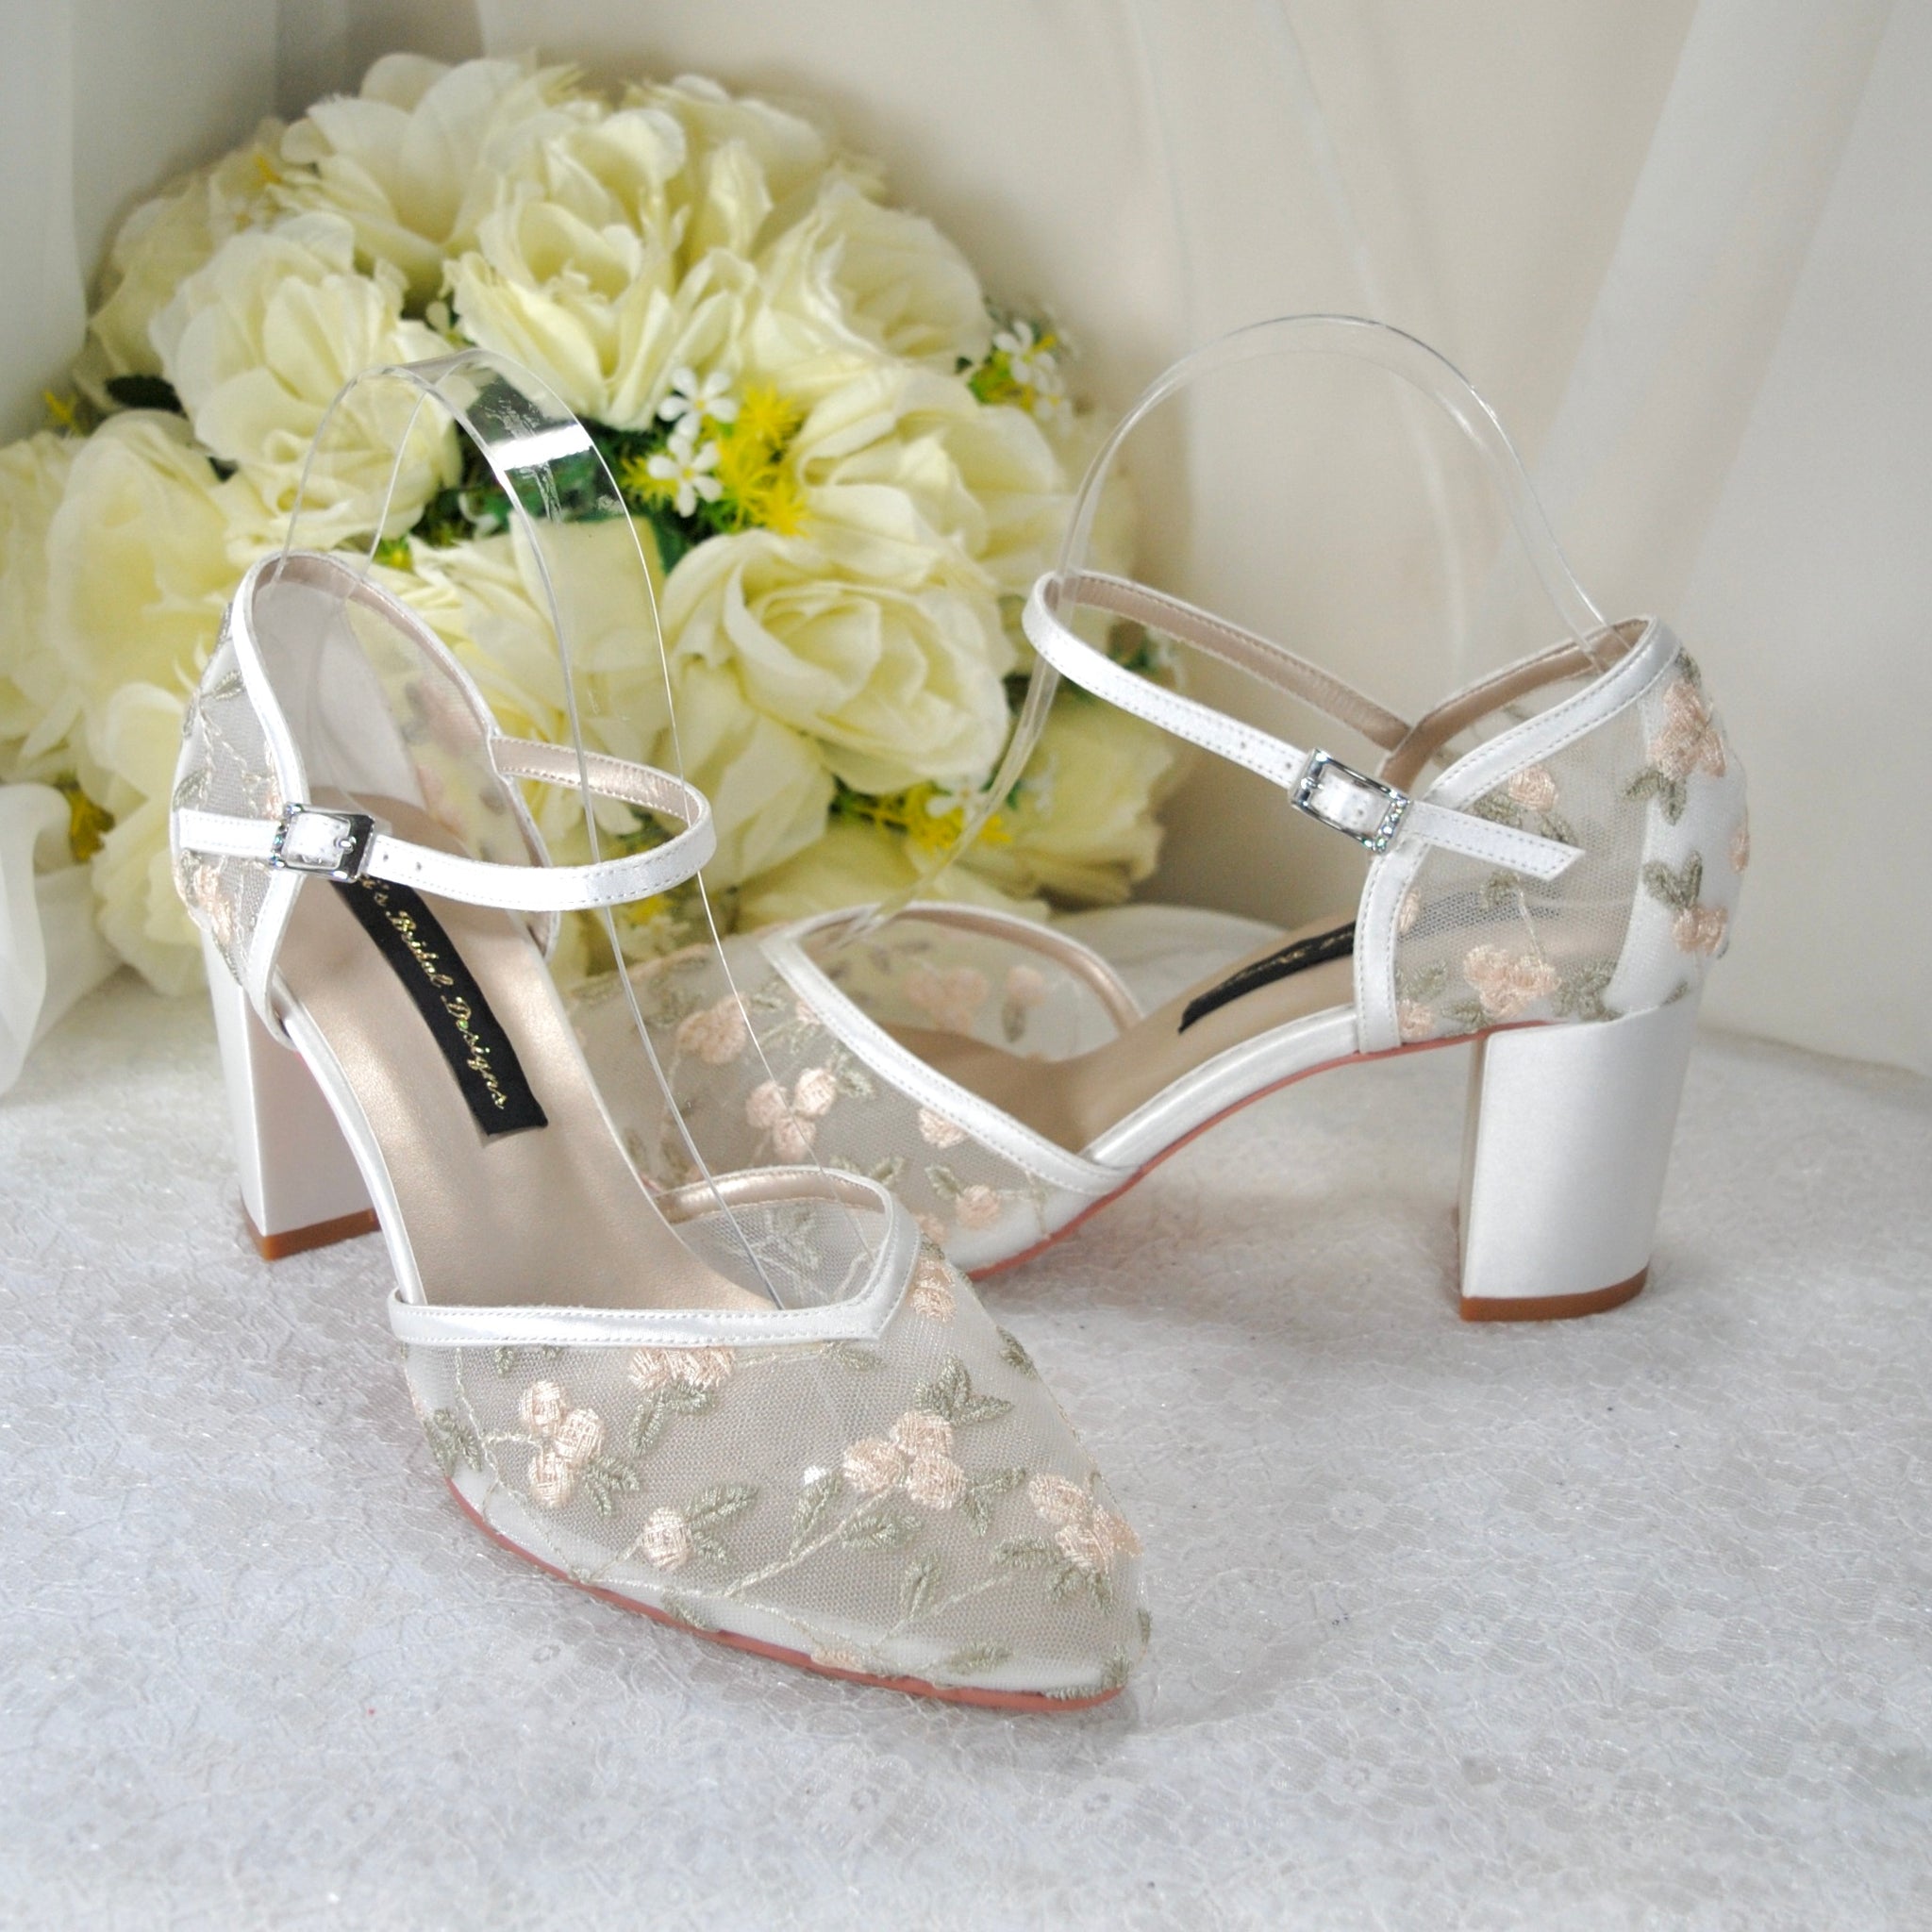 Designer wedding shoes & accessories | Manolo Blahnik